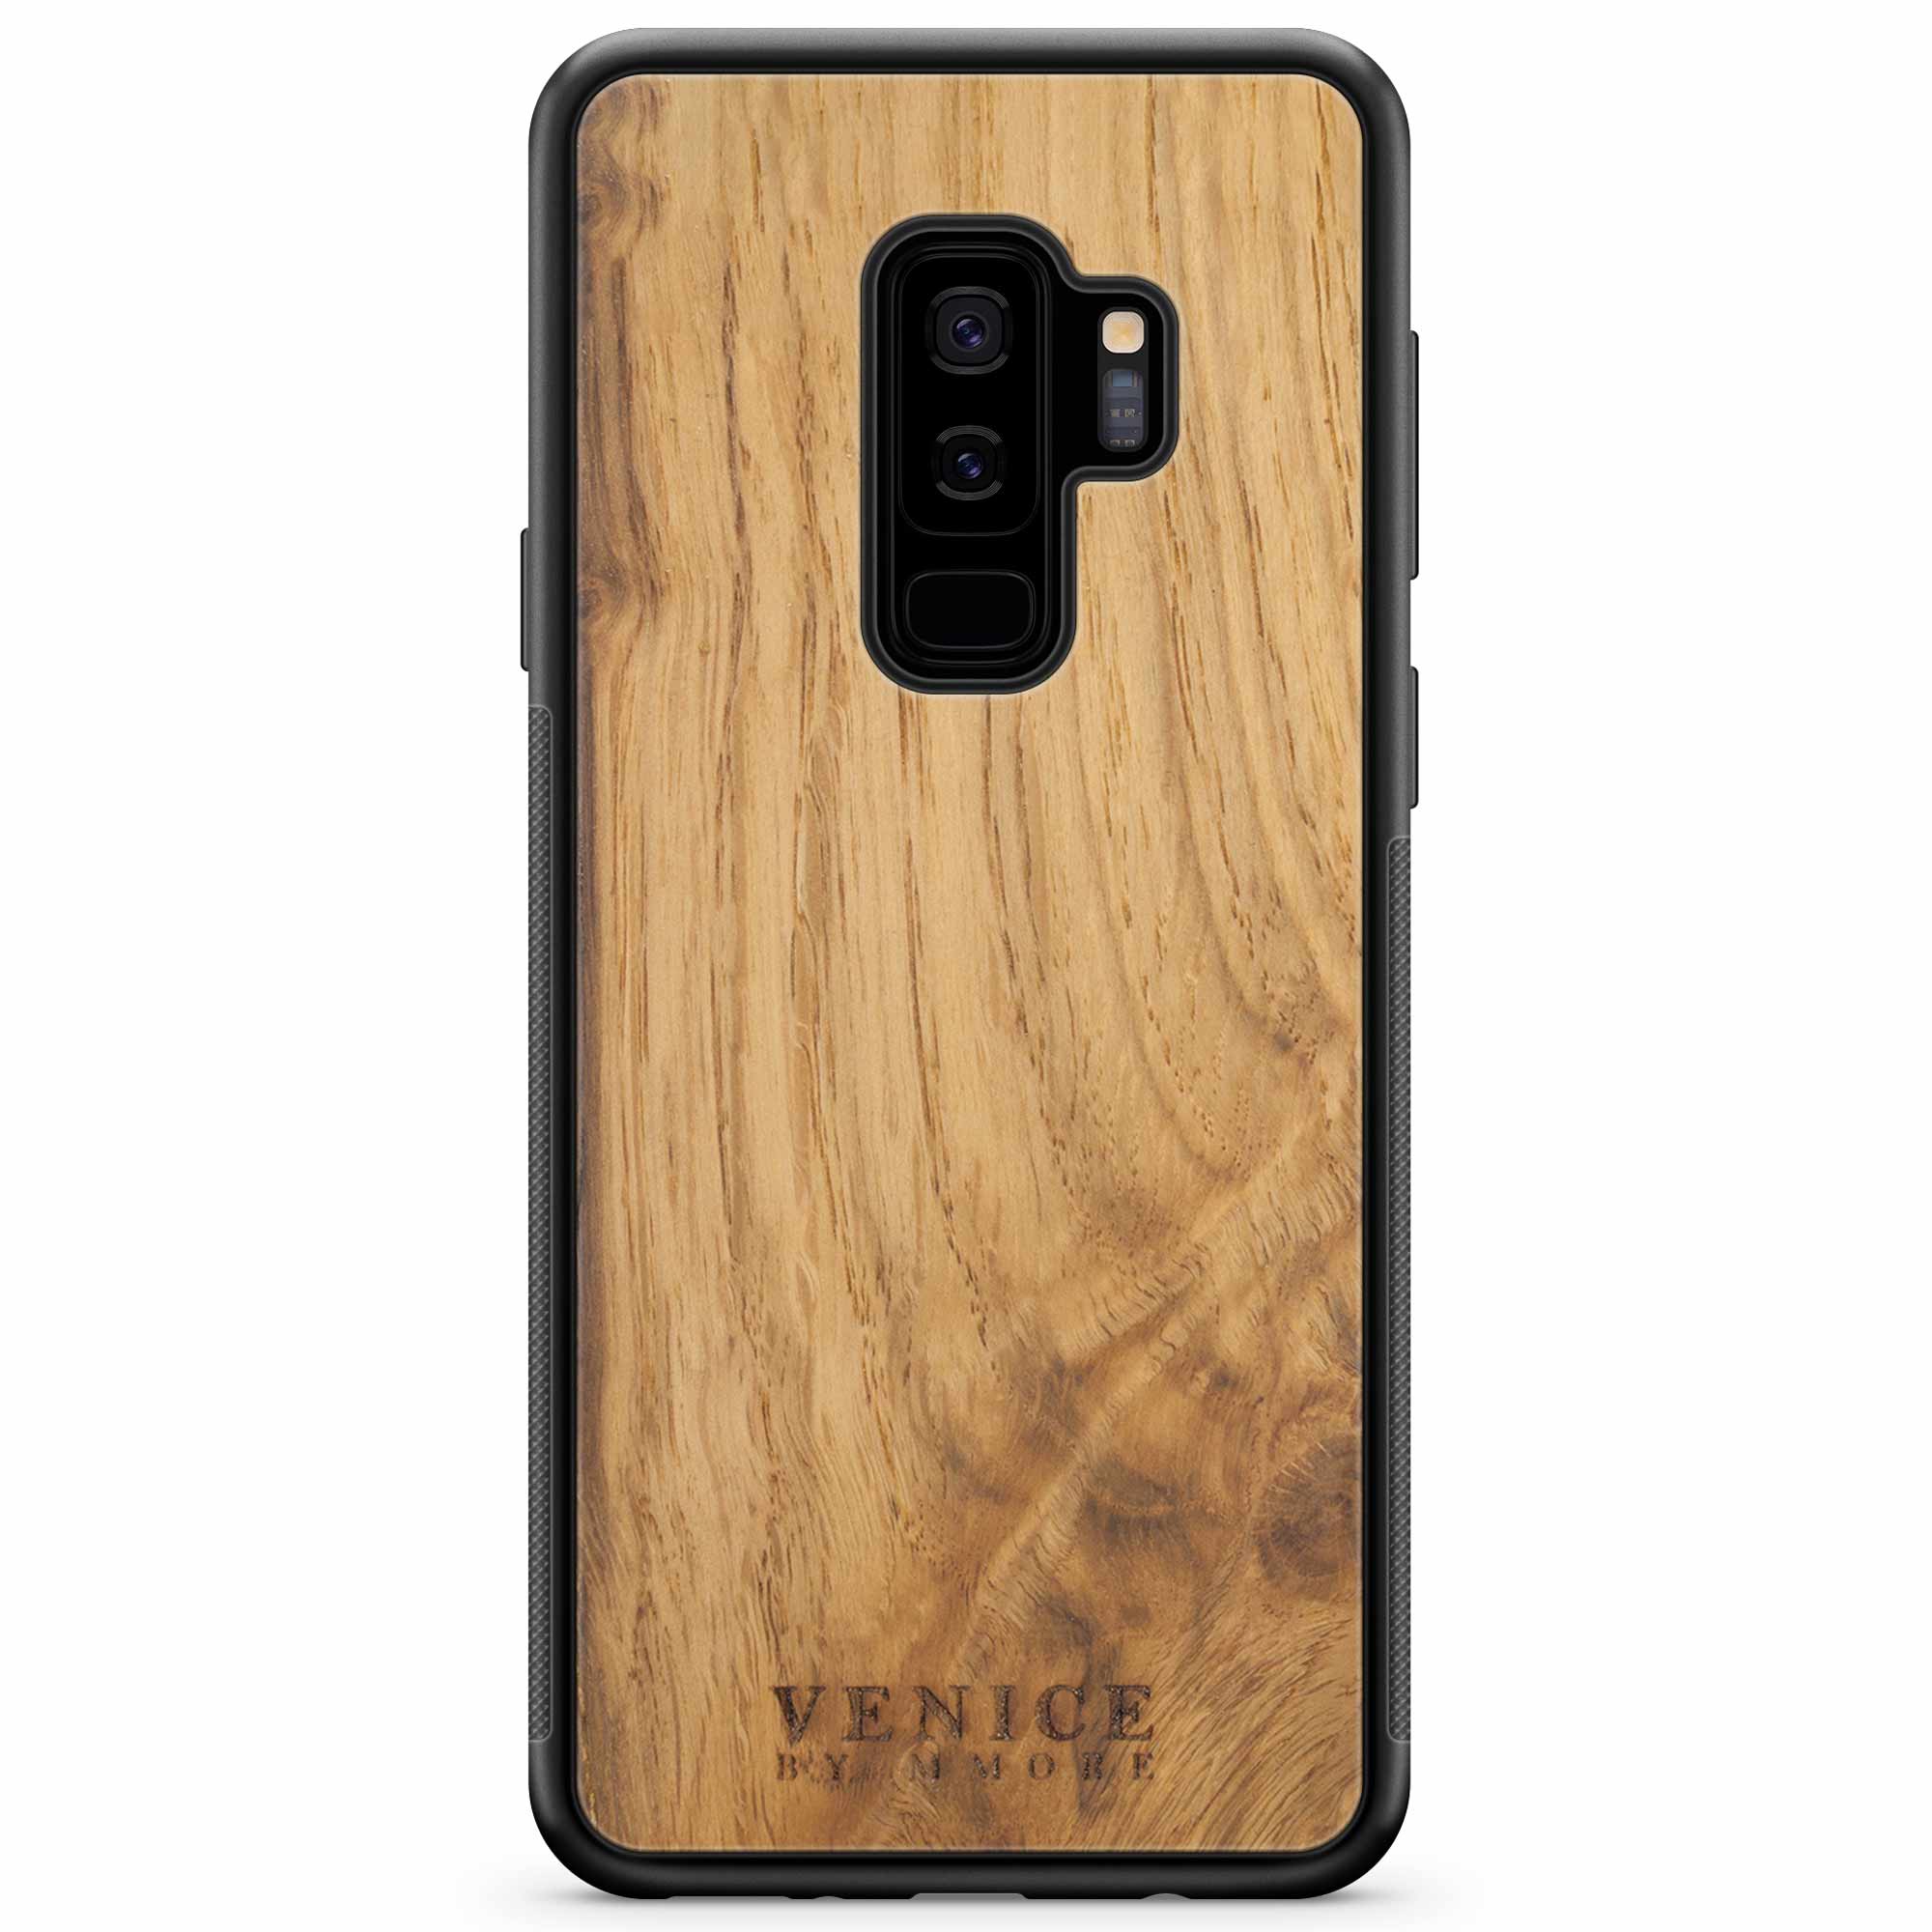 Venice Lettering Samsung S9 Plus Wood Phone Case